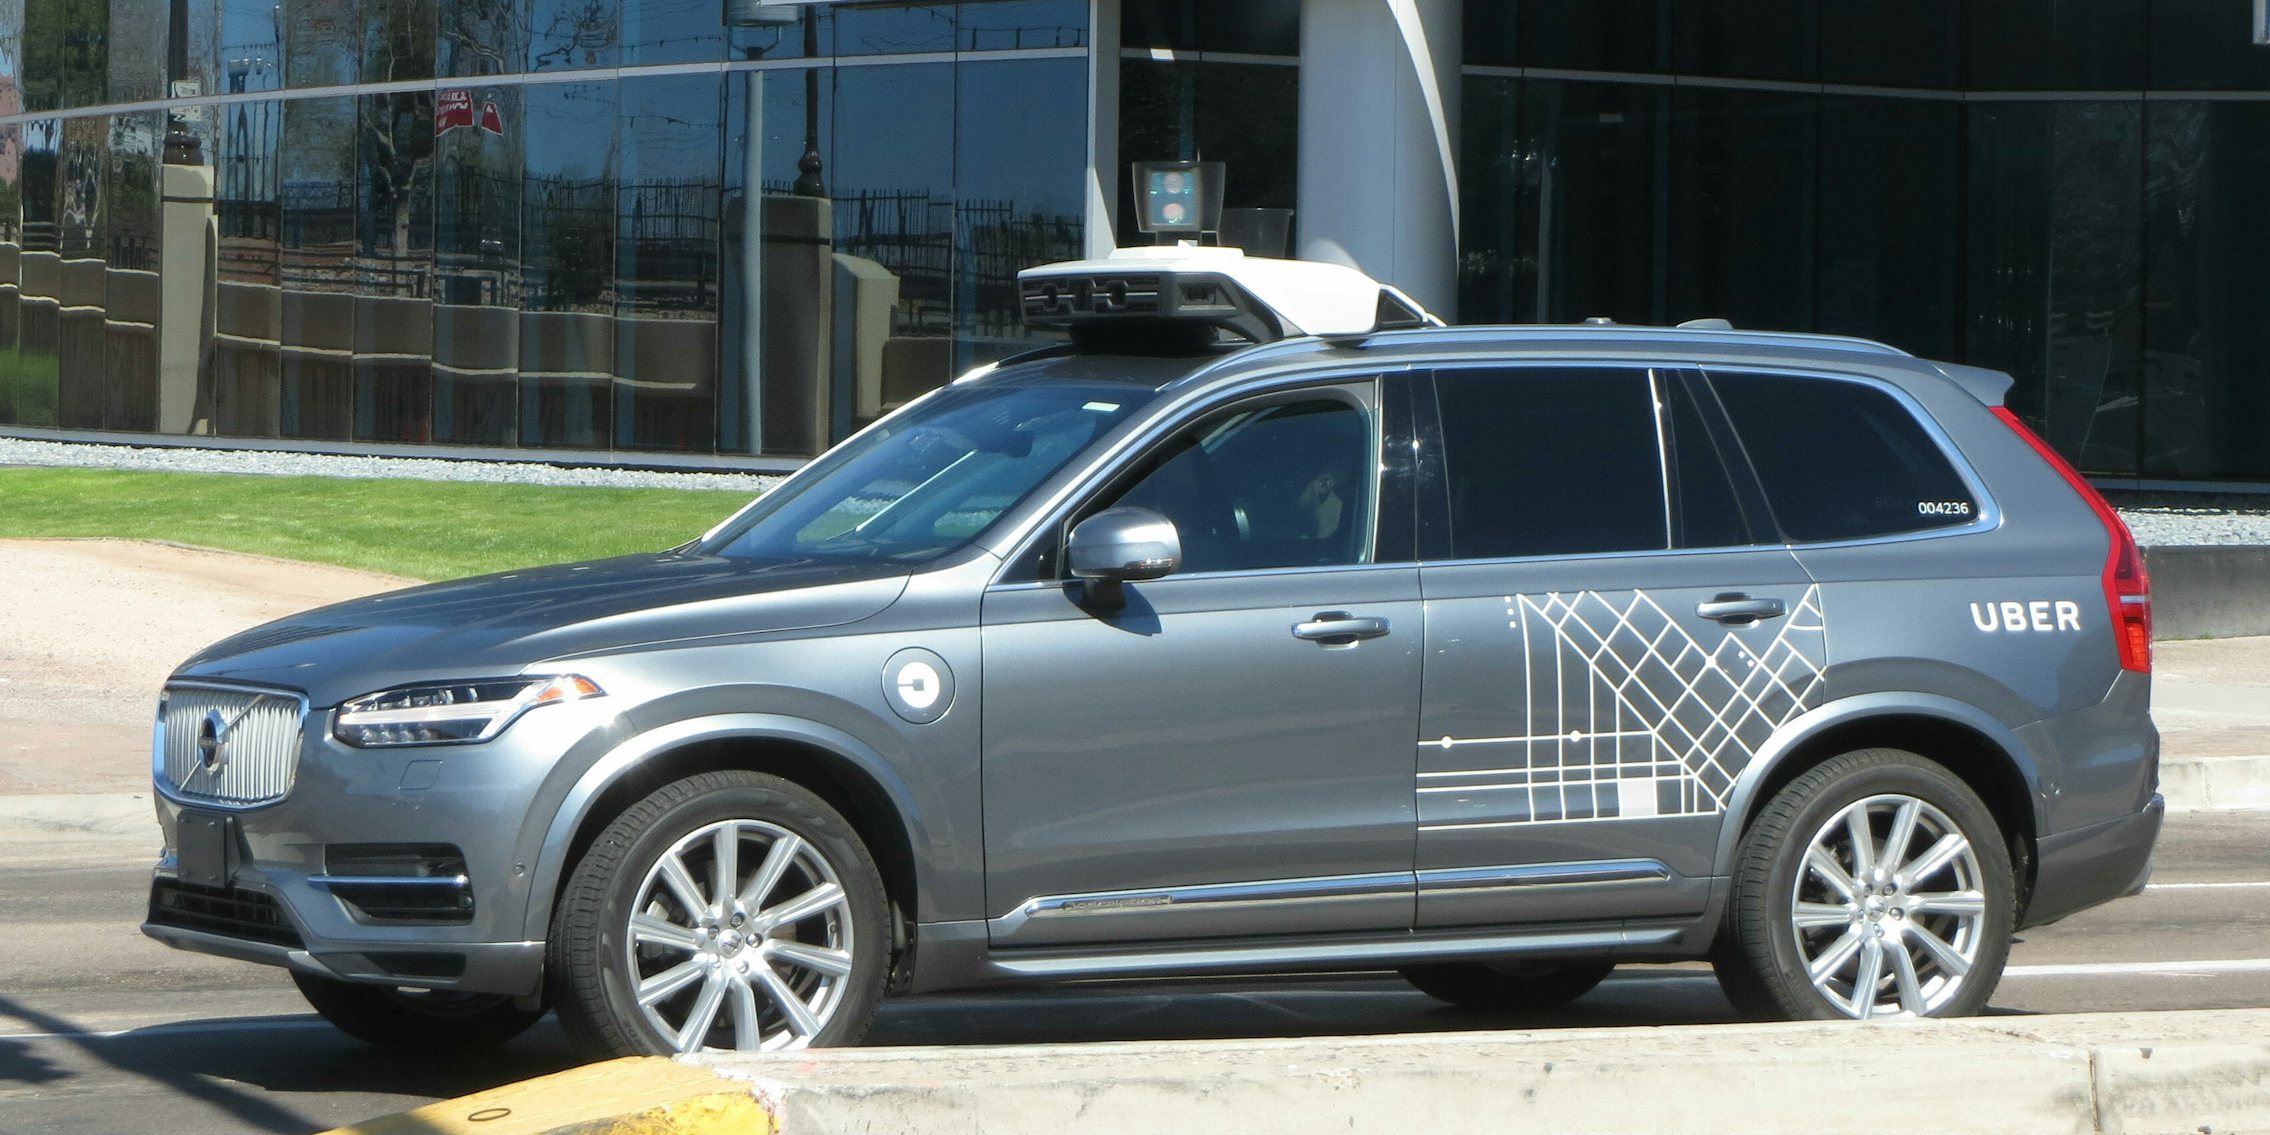 uber self-driving autonomous car vehicle